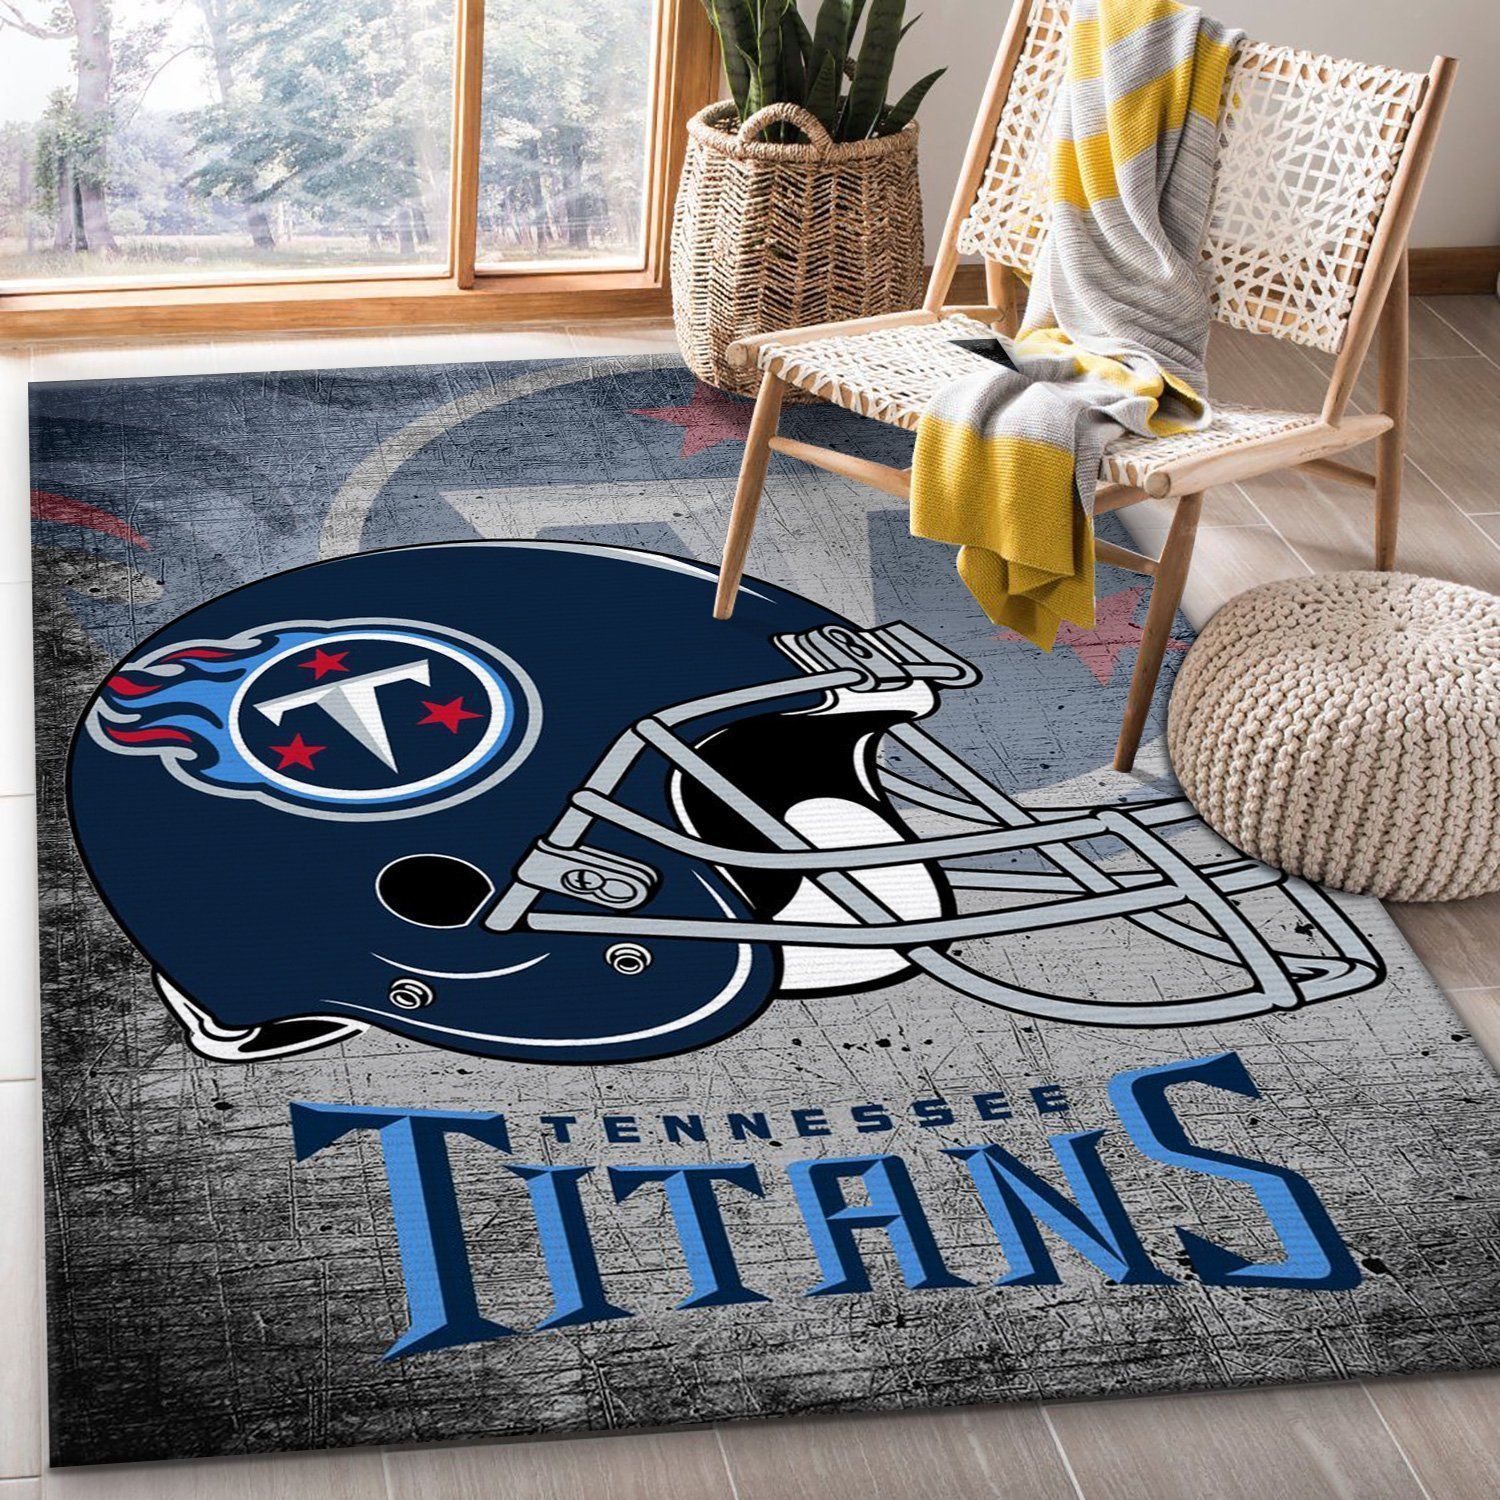 Tennessee Titans Football Nfl Rug Bedroom Rug Home Decor Floor Decor - Indoor Outdoor Rugs